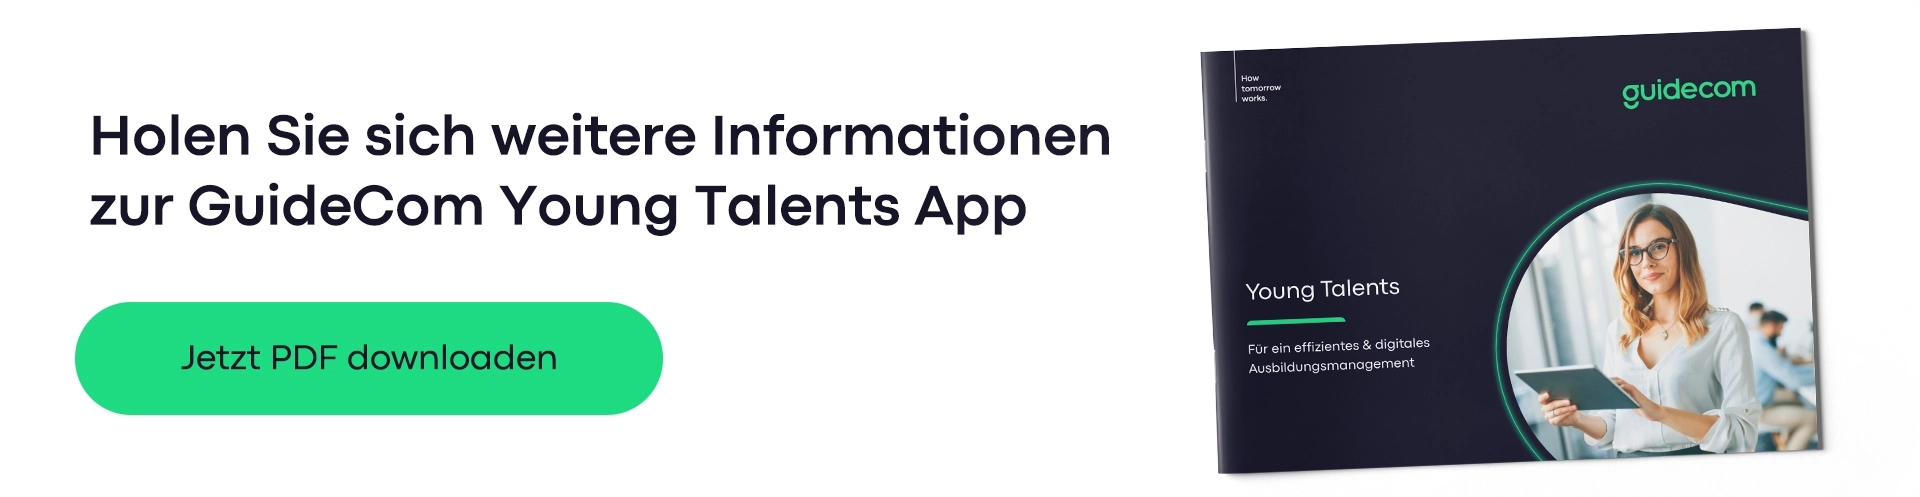 Produktfolder Young Talents App